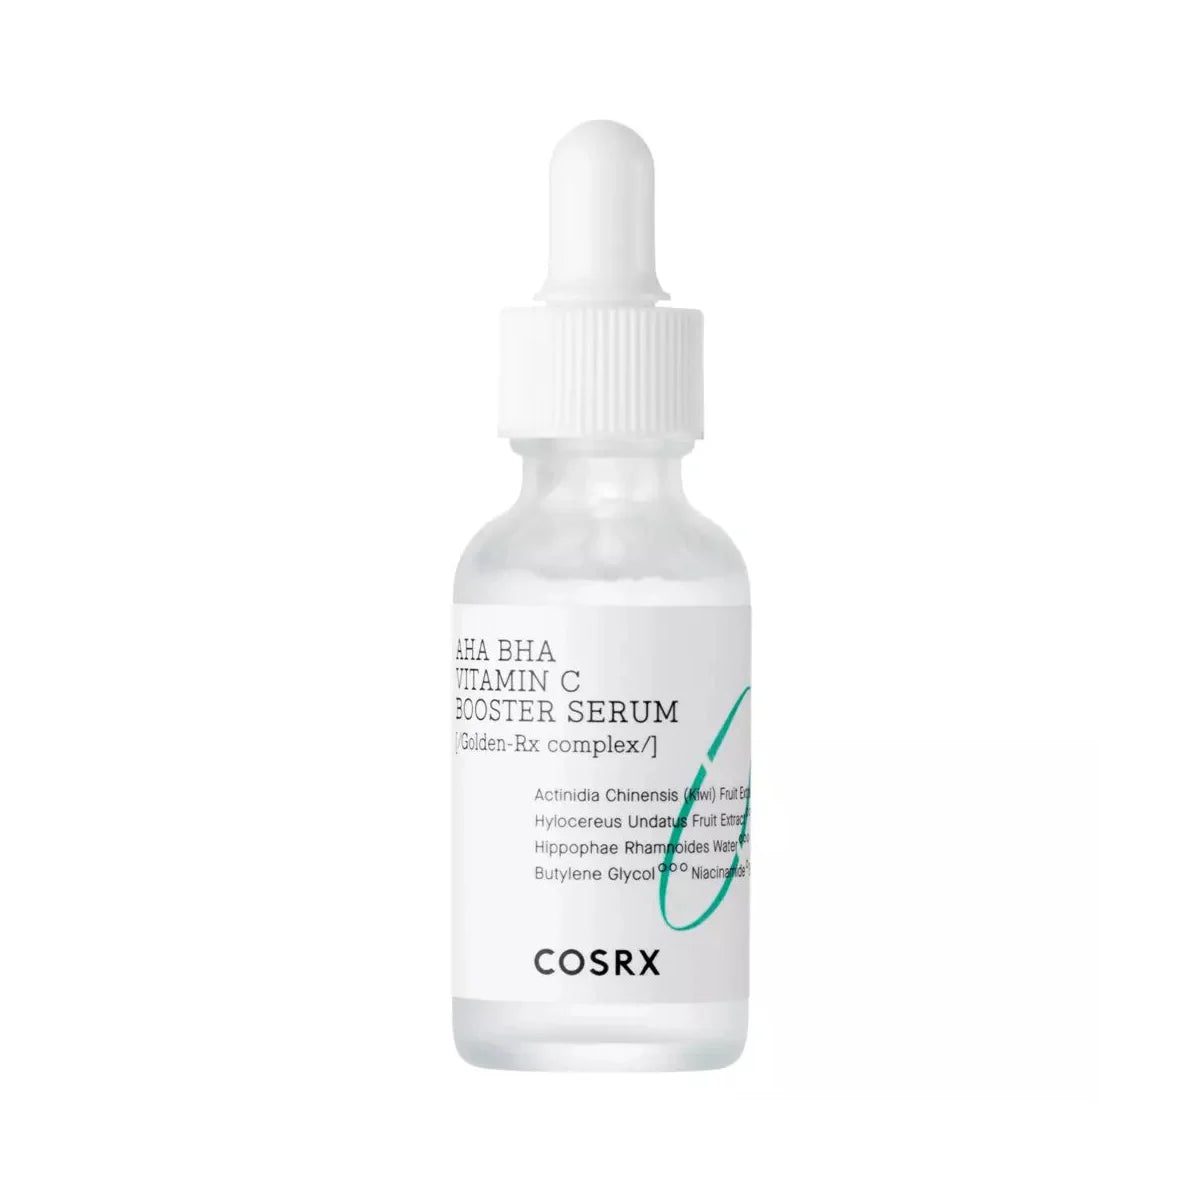 Cosrx Refresh AHA BHA Vitamin C Booster Serum best Korean chemical exfoliant for softer and brighter skin K Beauty World 